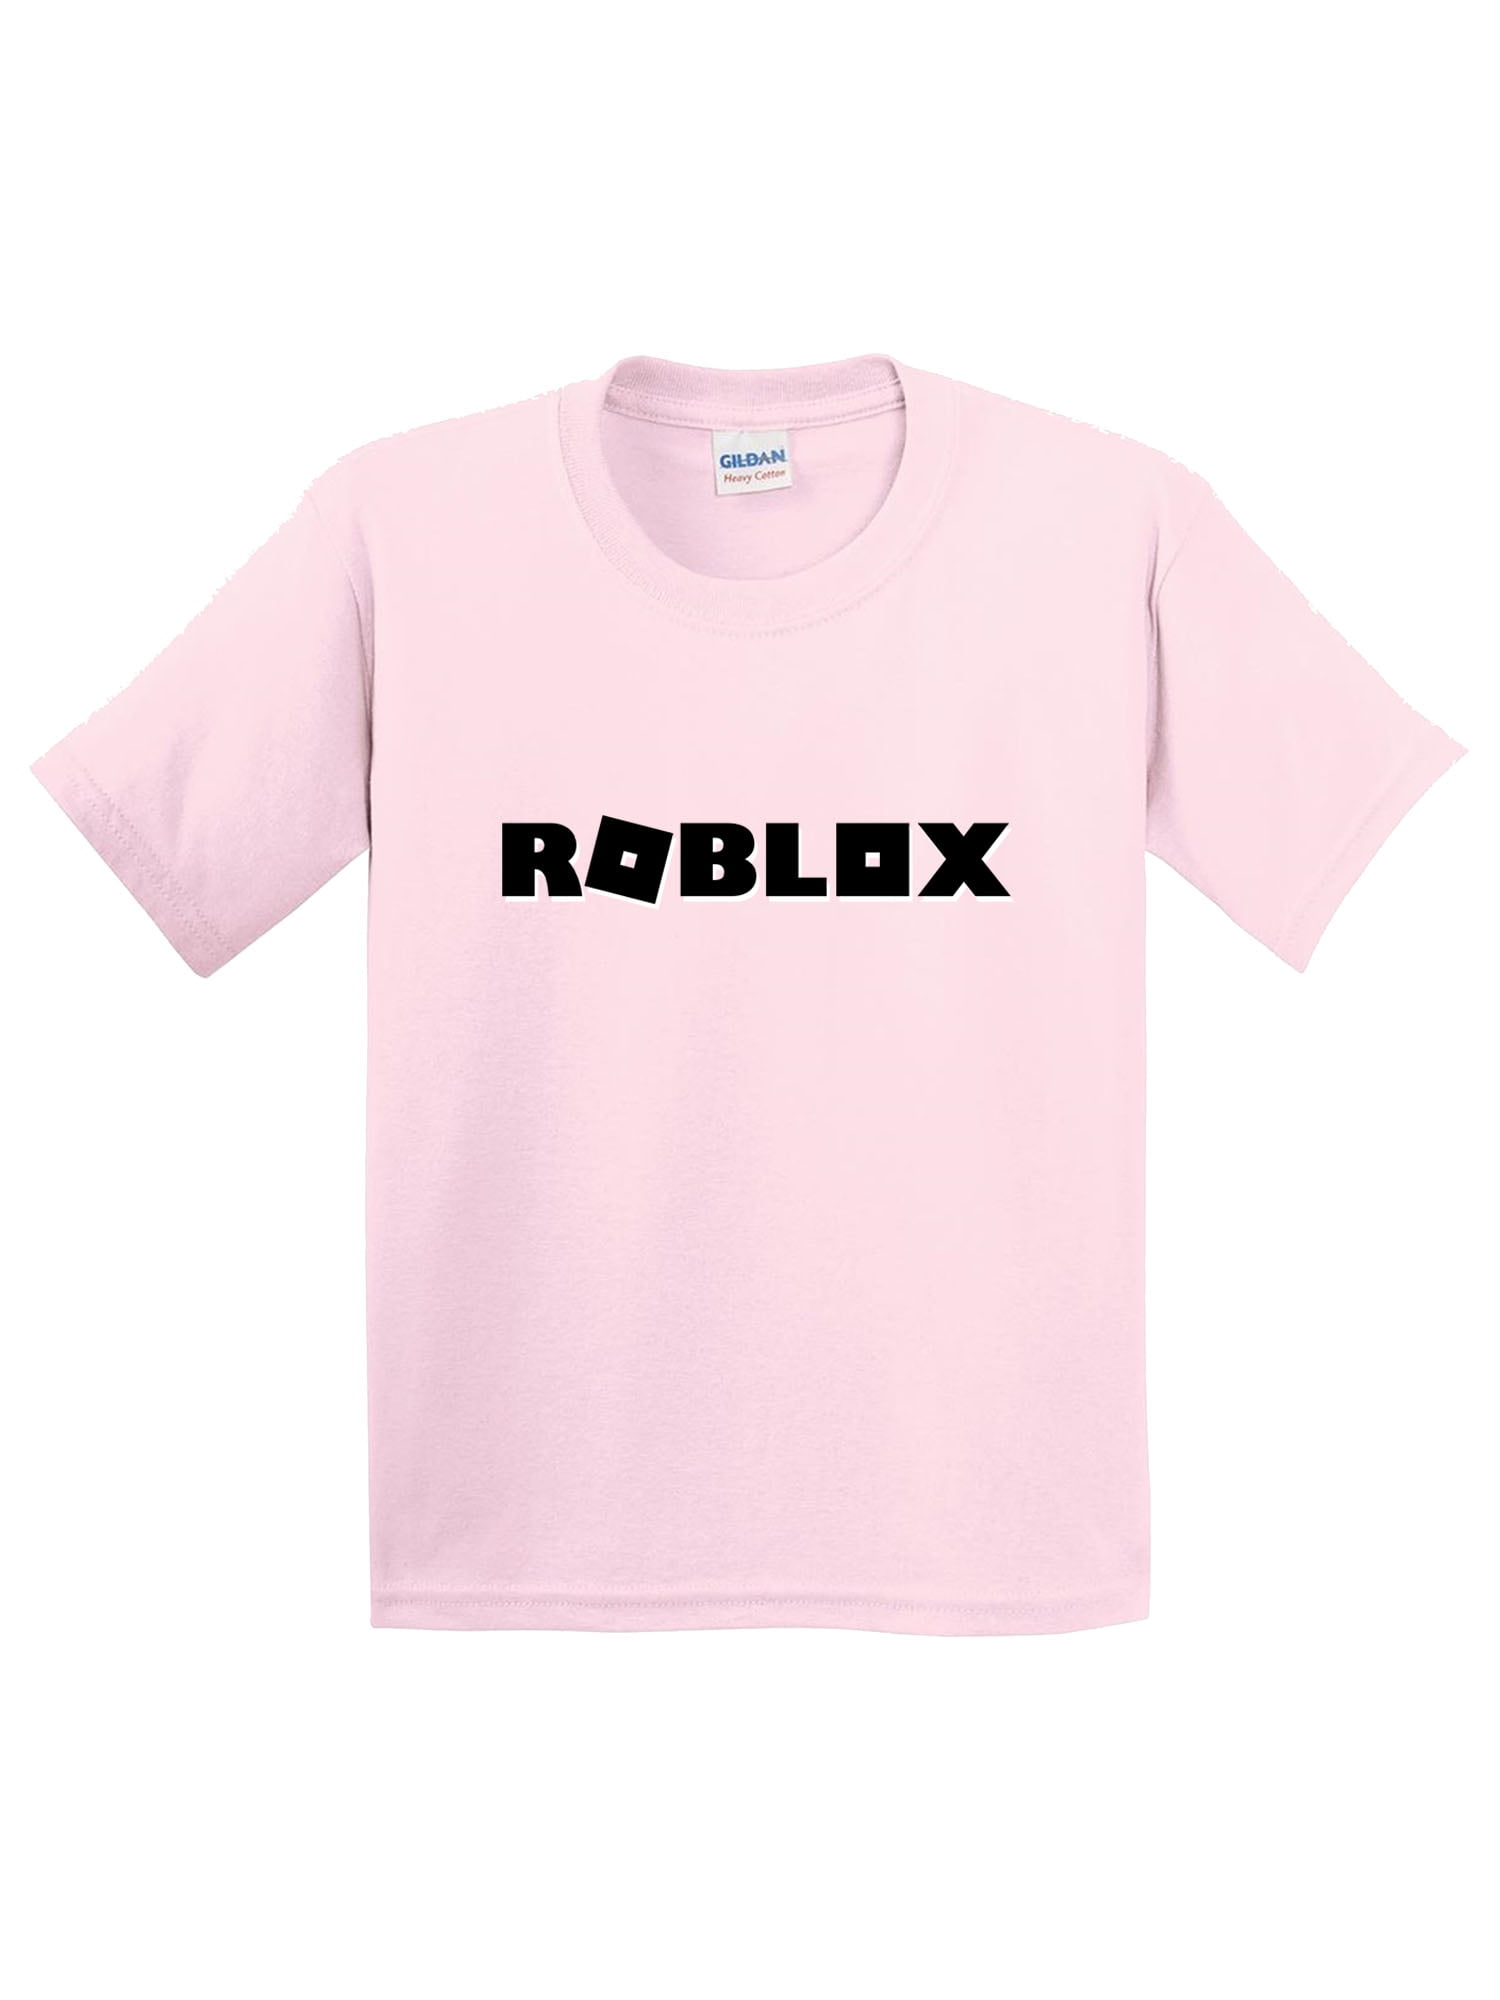 New Way New Way 1168 Youth T Shirt Roblox Block Logo Game Accent Medium Light Pink Walmart Com Walmart Com